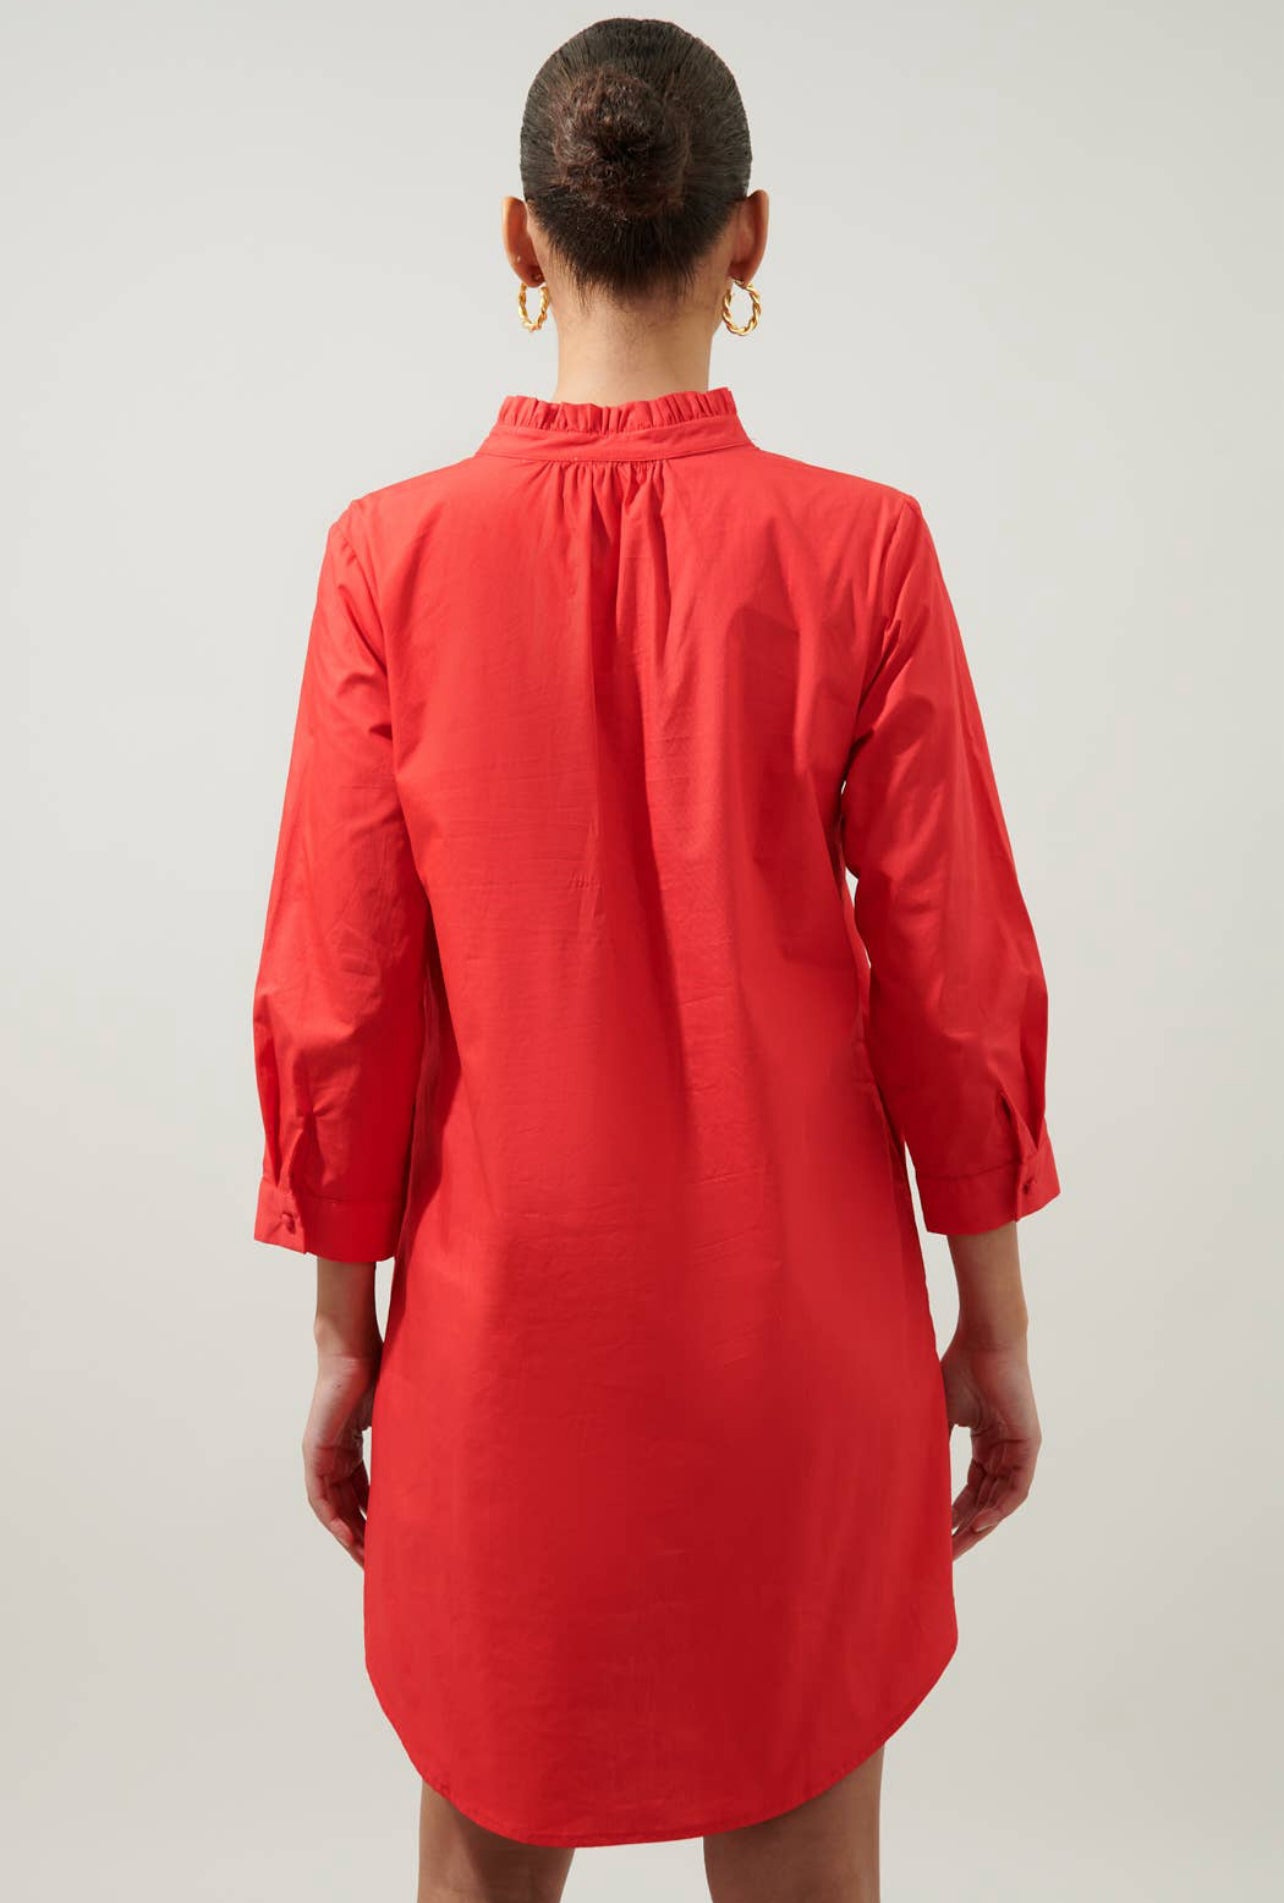 Camden Poplin Collared Shirt Dress- Red